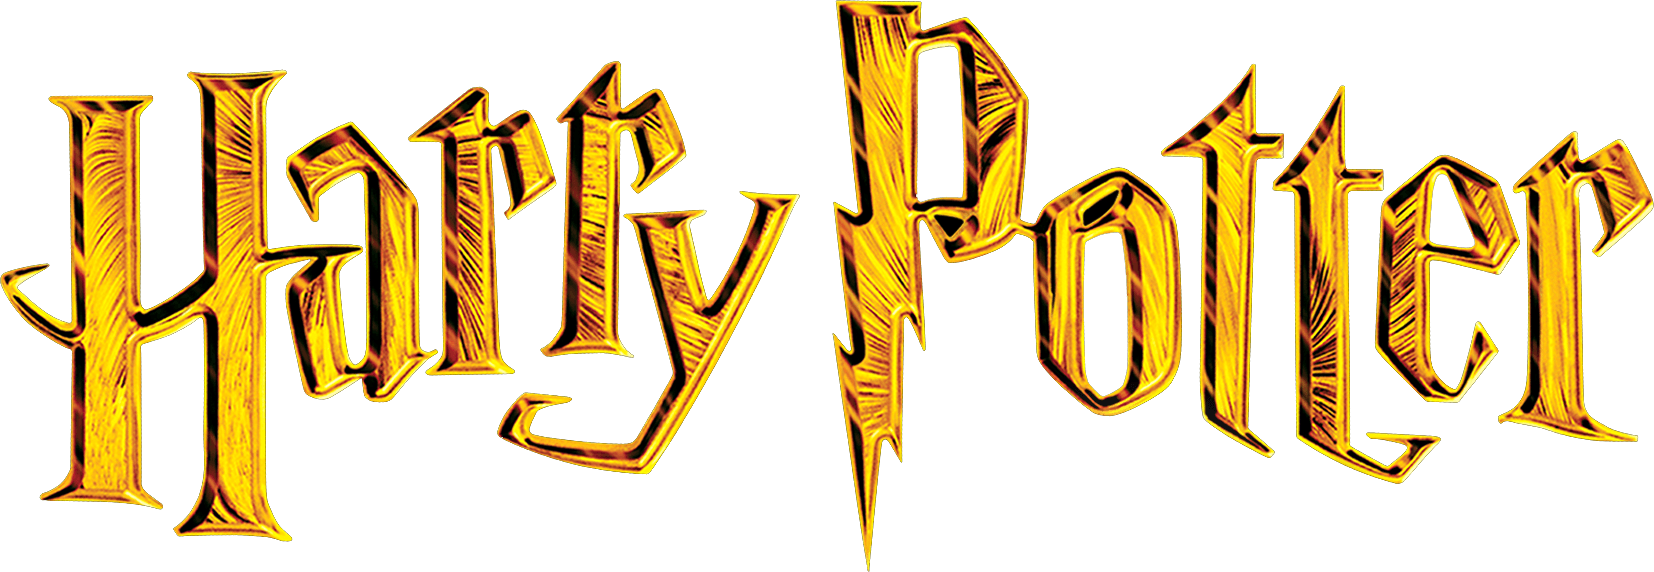 Harry Potter 2 Logo - Harry potter hp Logos